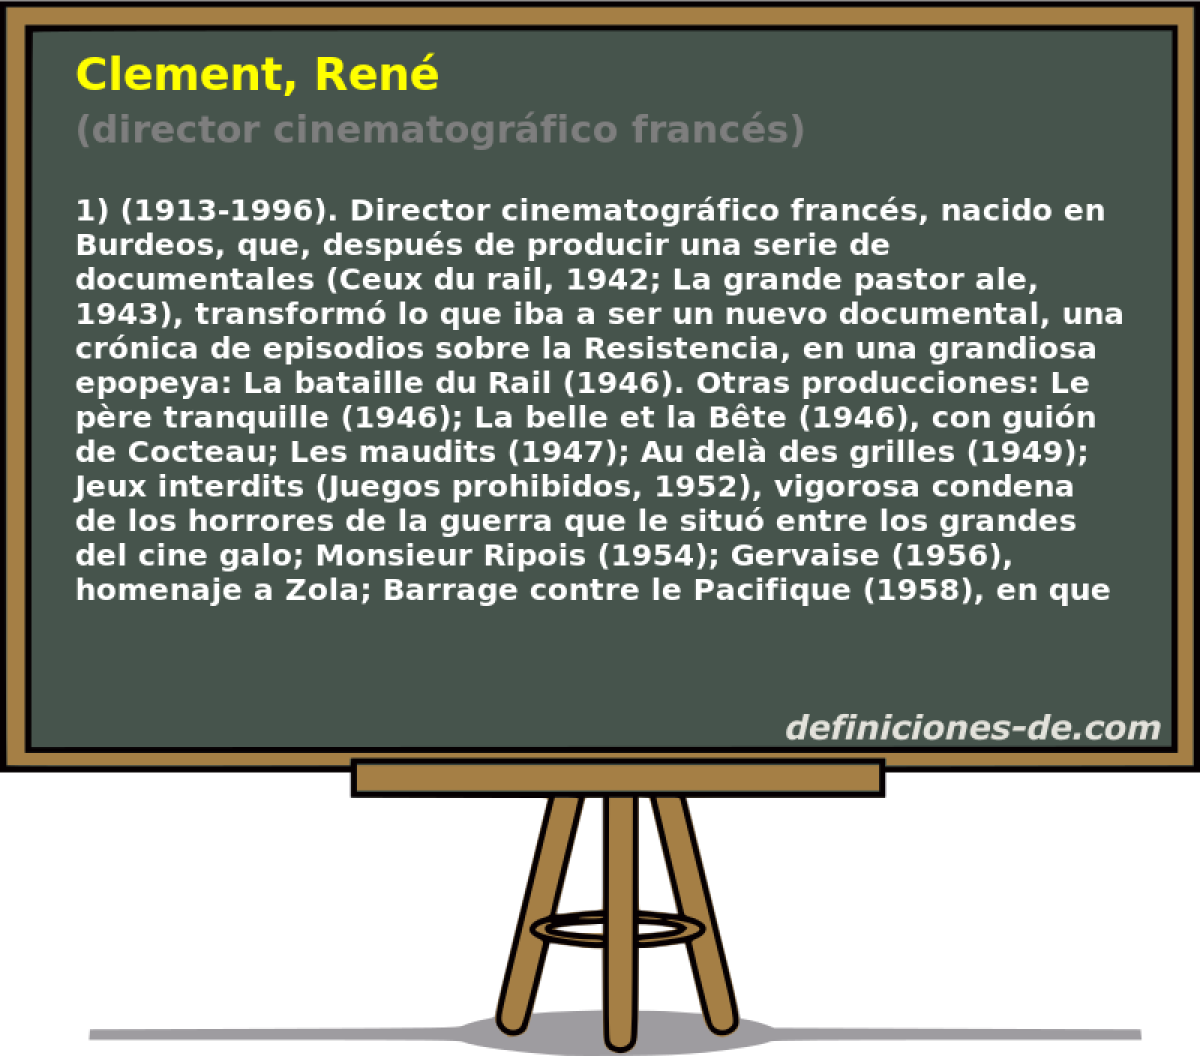 Clement, Ren (director cinematogrfico francs)